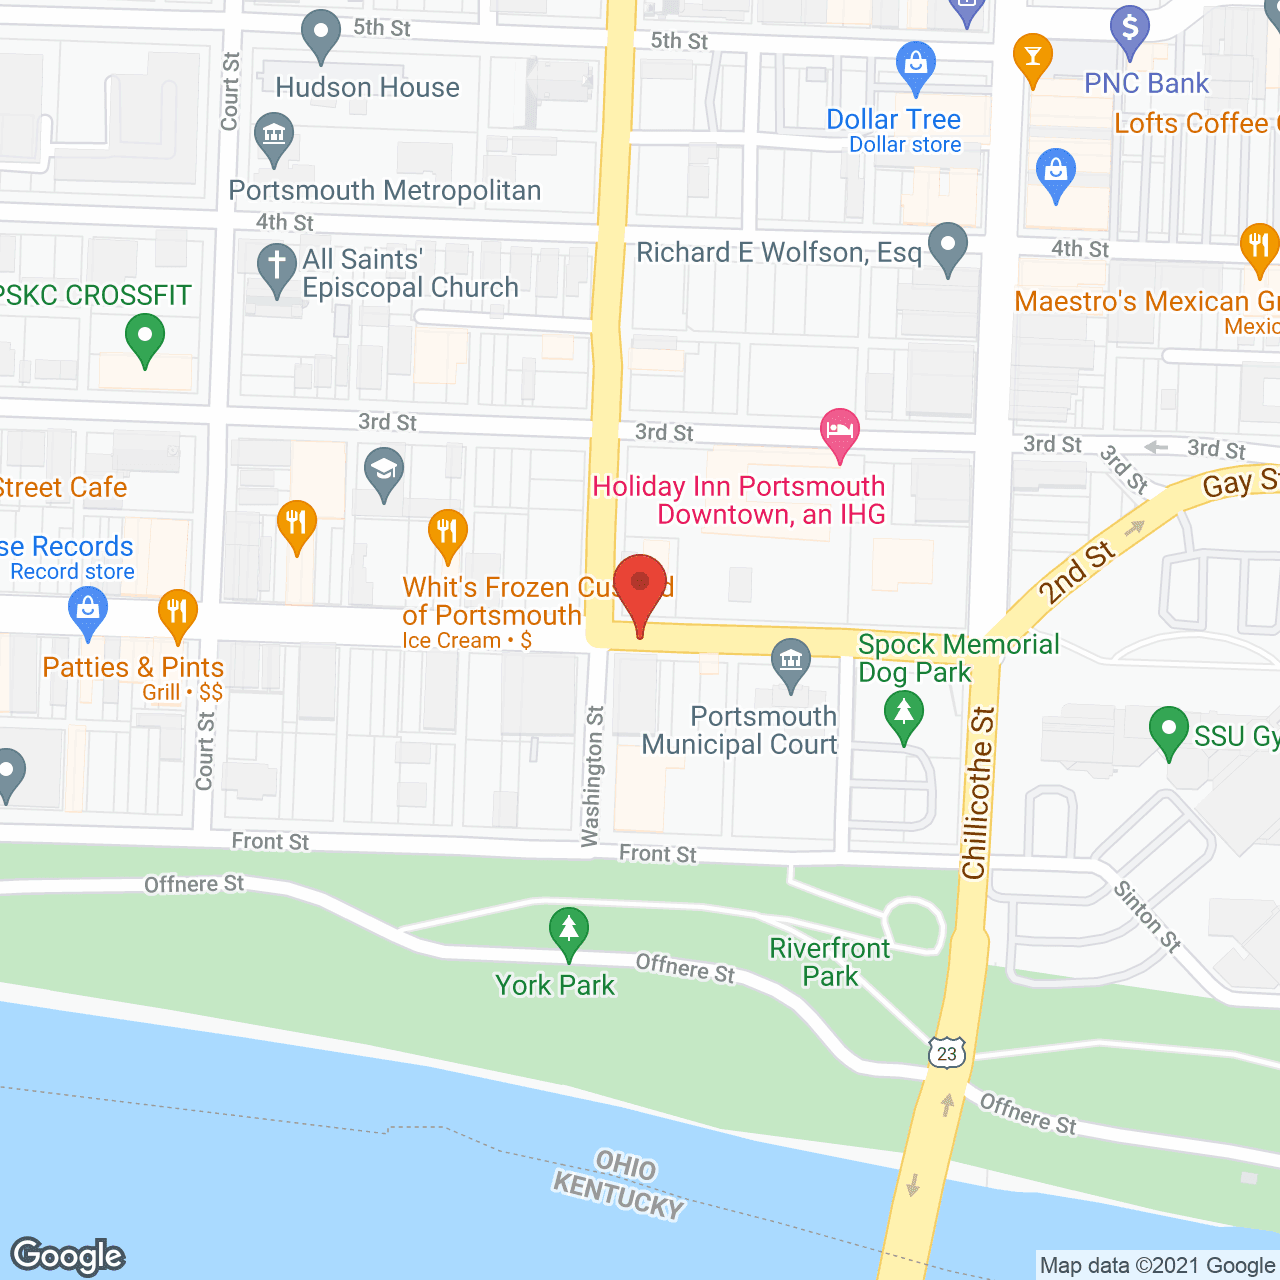 Horizon House Apartments in google map